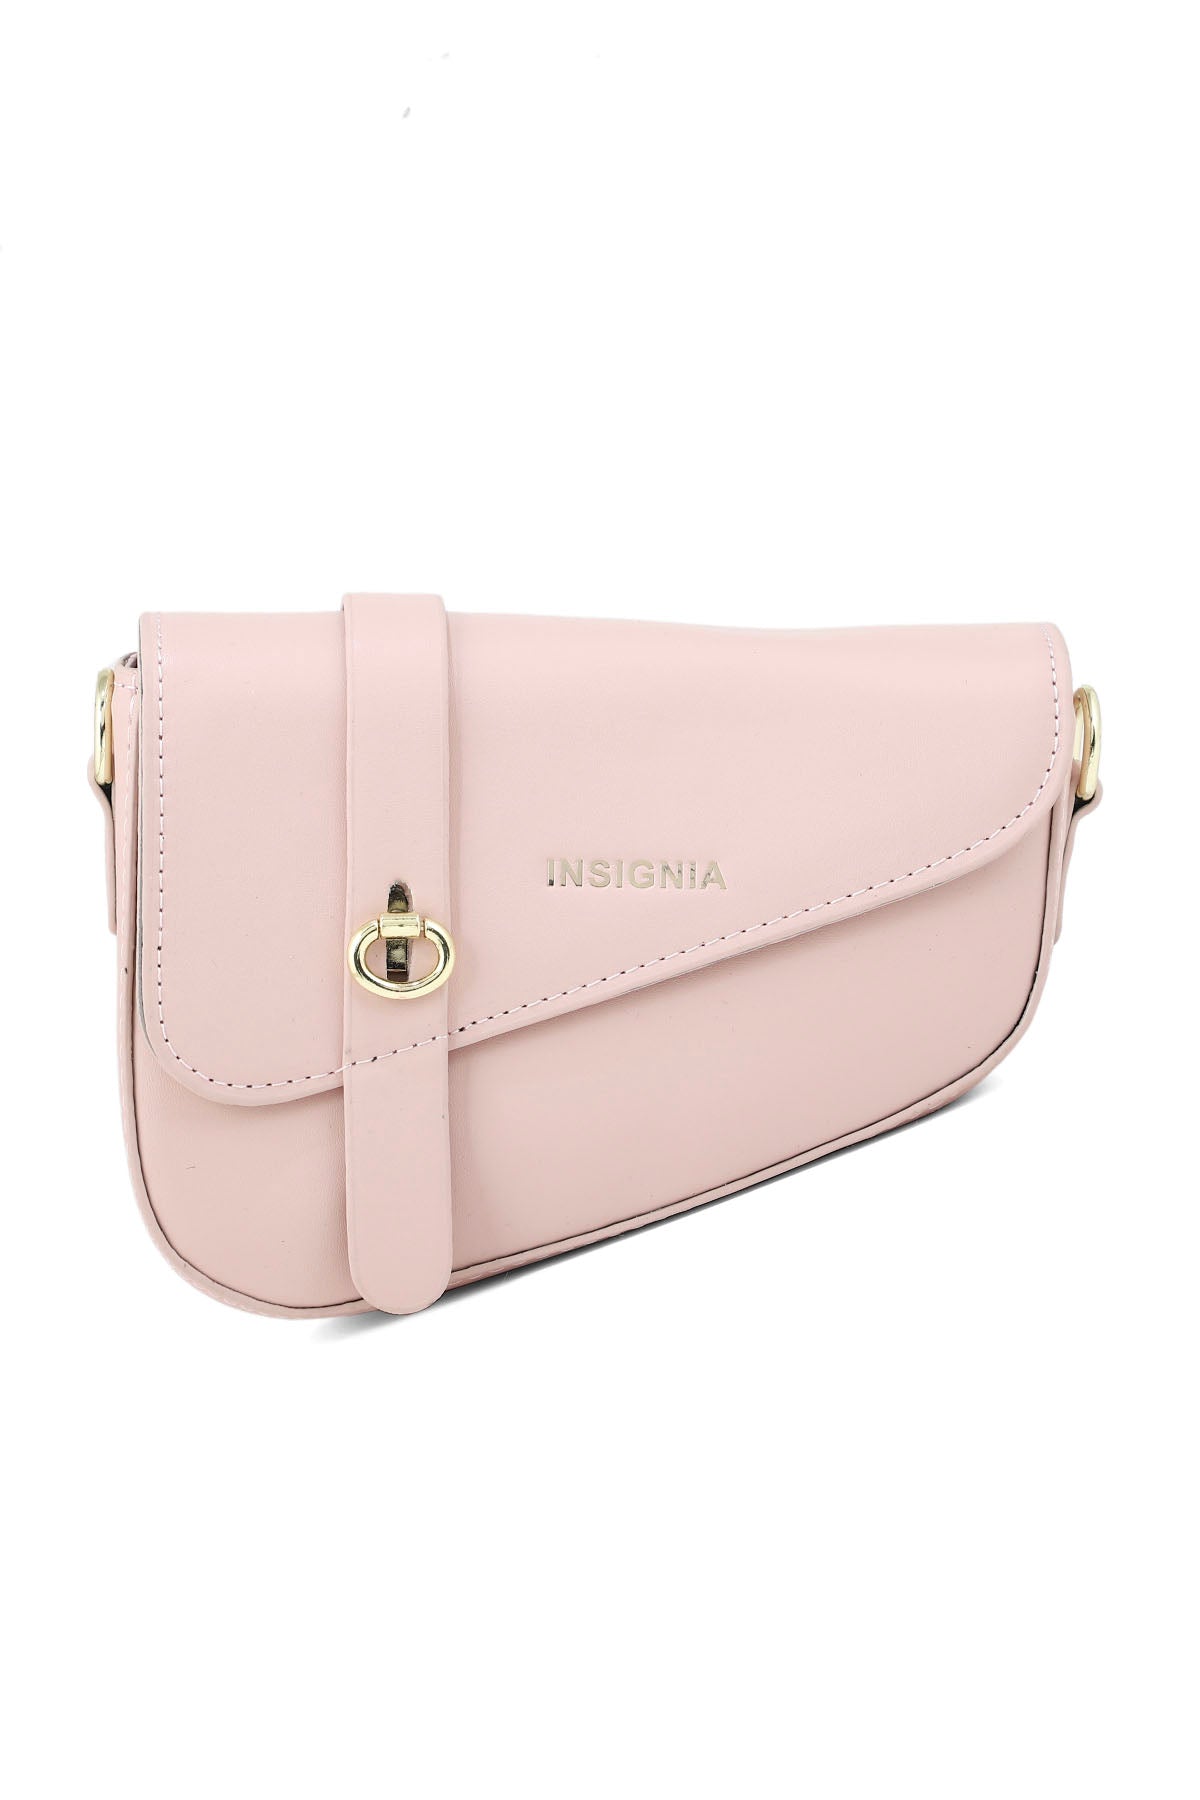 Cross Shoulder Bags B14956-Pink